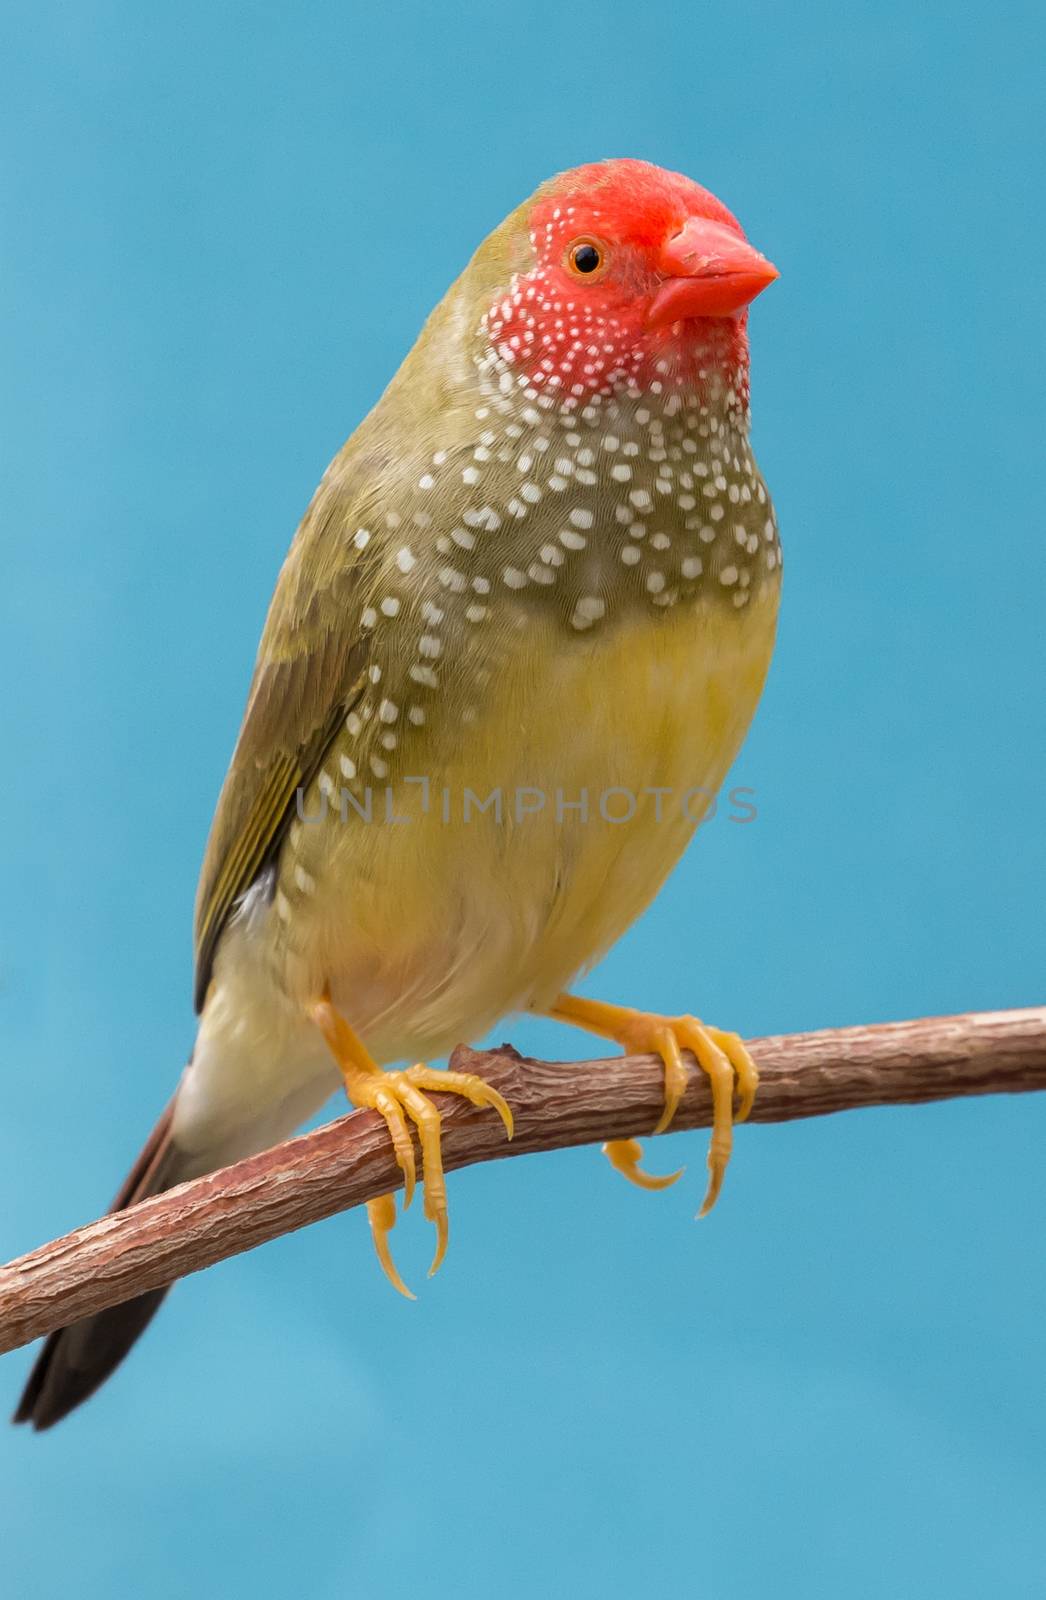 Beautiful star finch bird from Australia